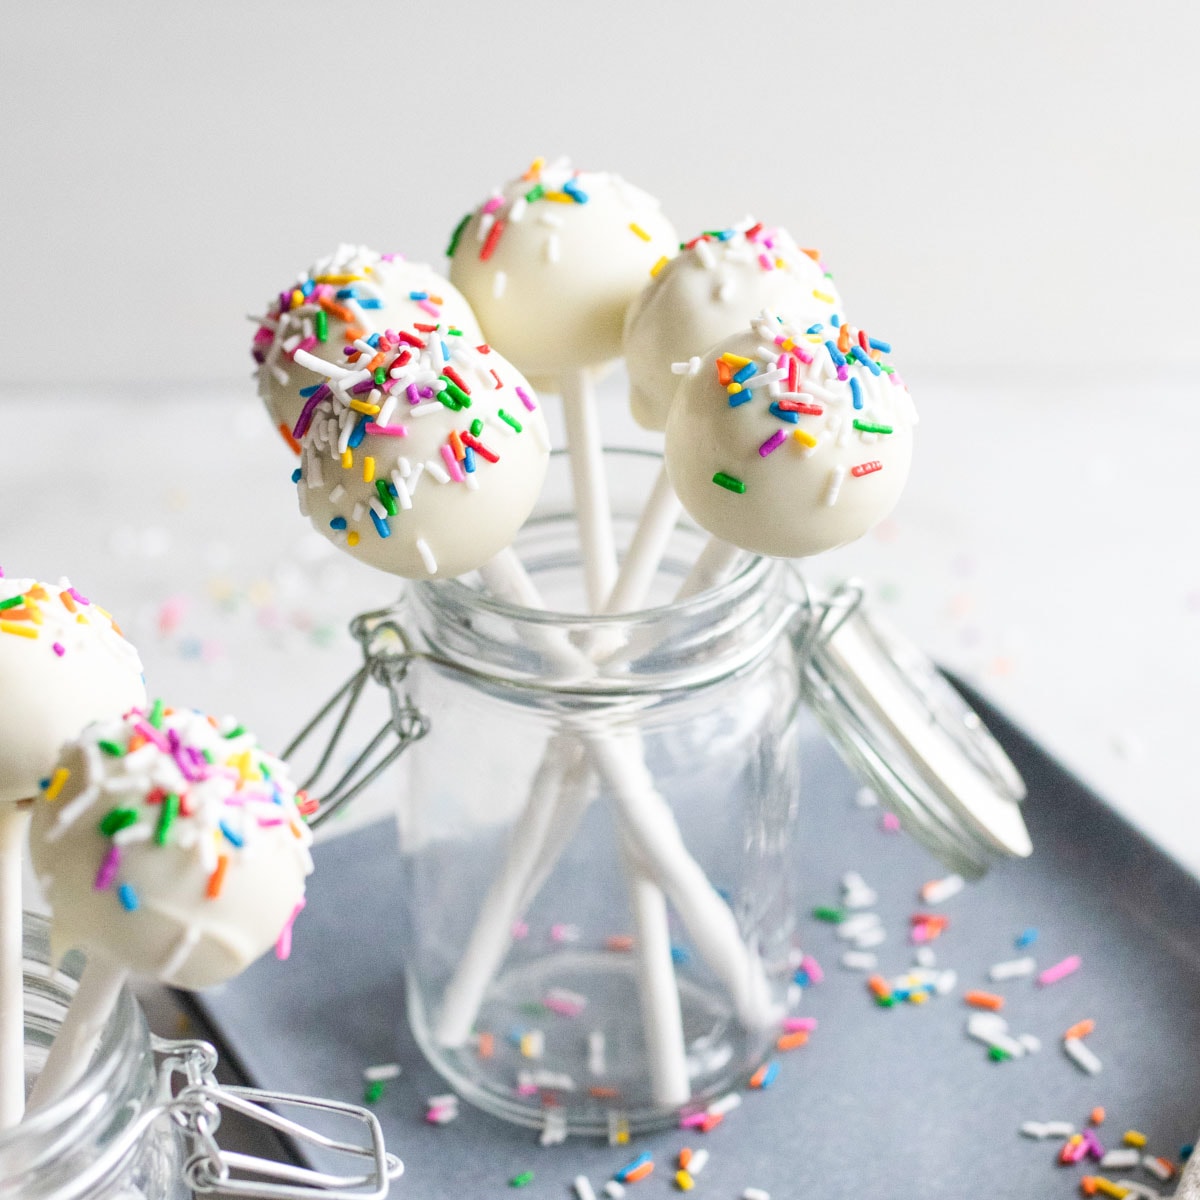 How to Make Cake Pops and Cake Balls - CakeWhiz